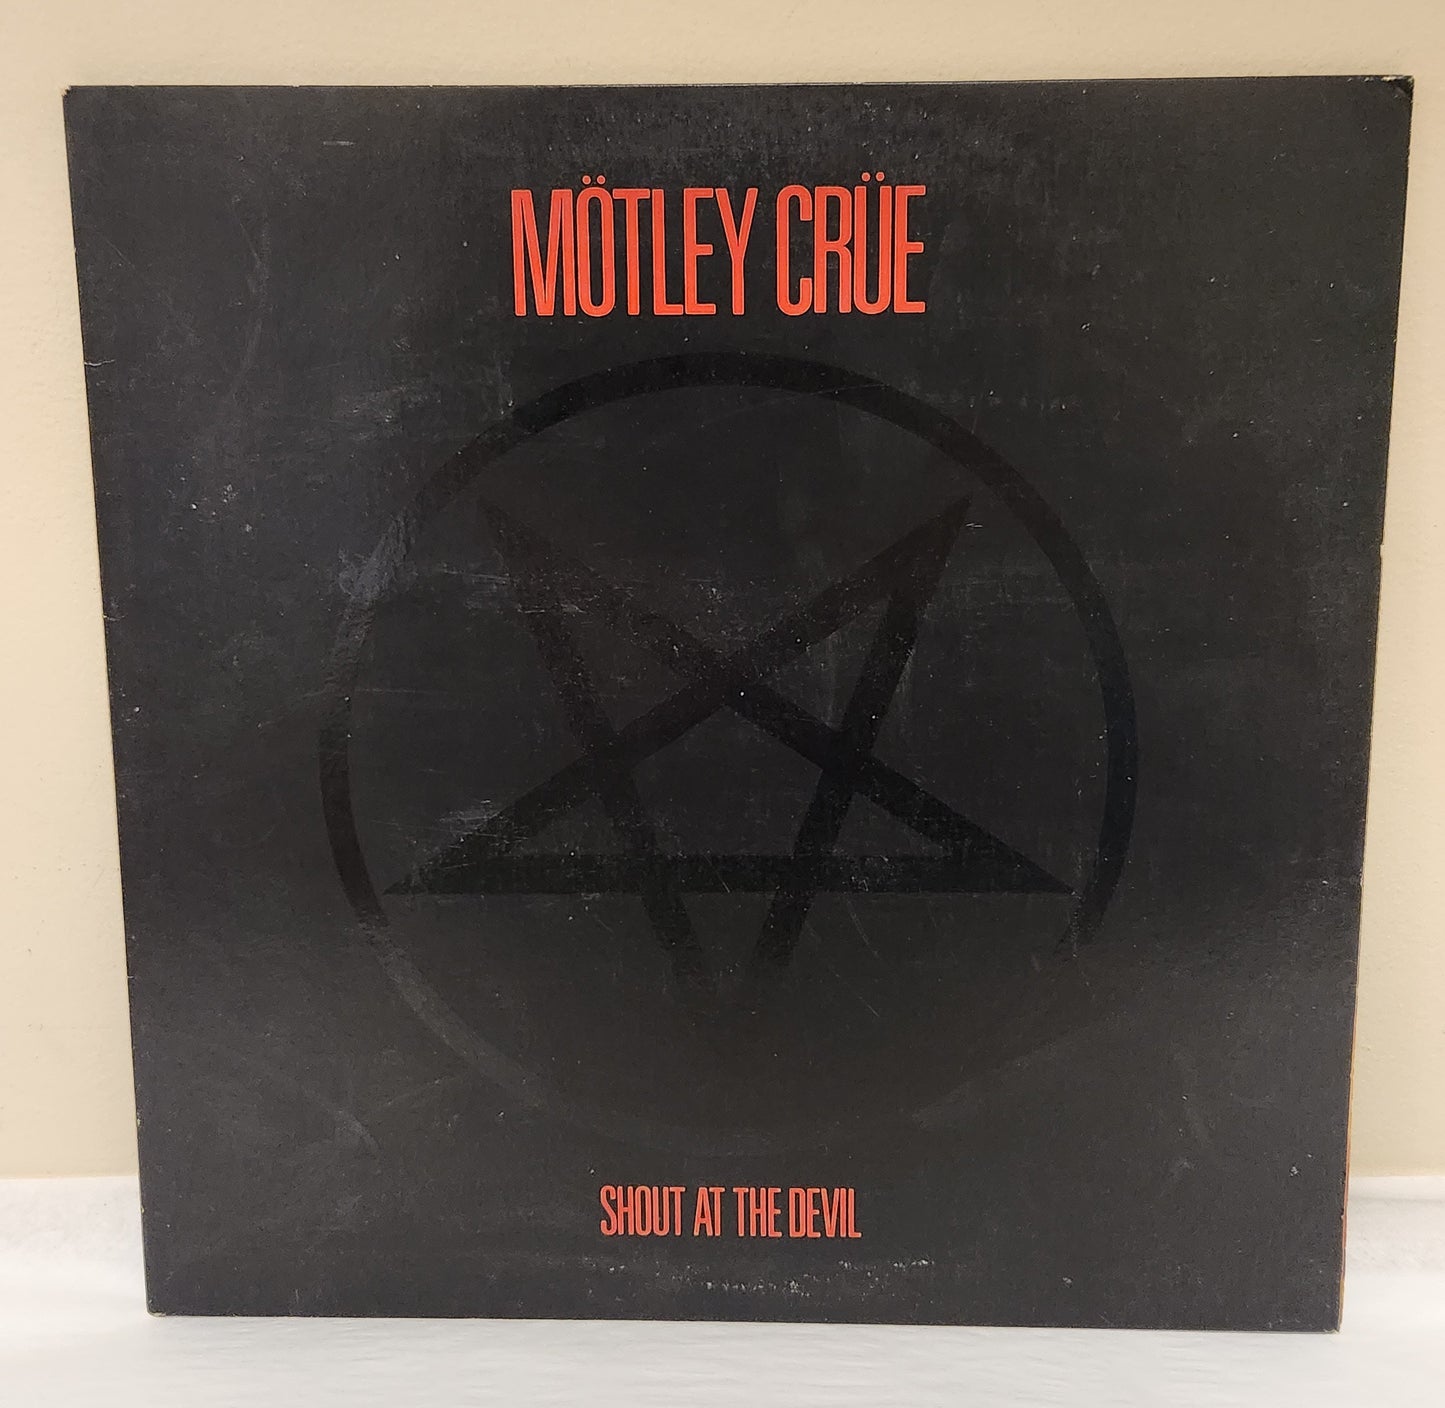 Motley Crue "Shout At The Devil" 1983 Hard Rock Heavy Metal Record Album (With Fan Club Form)